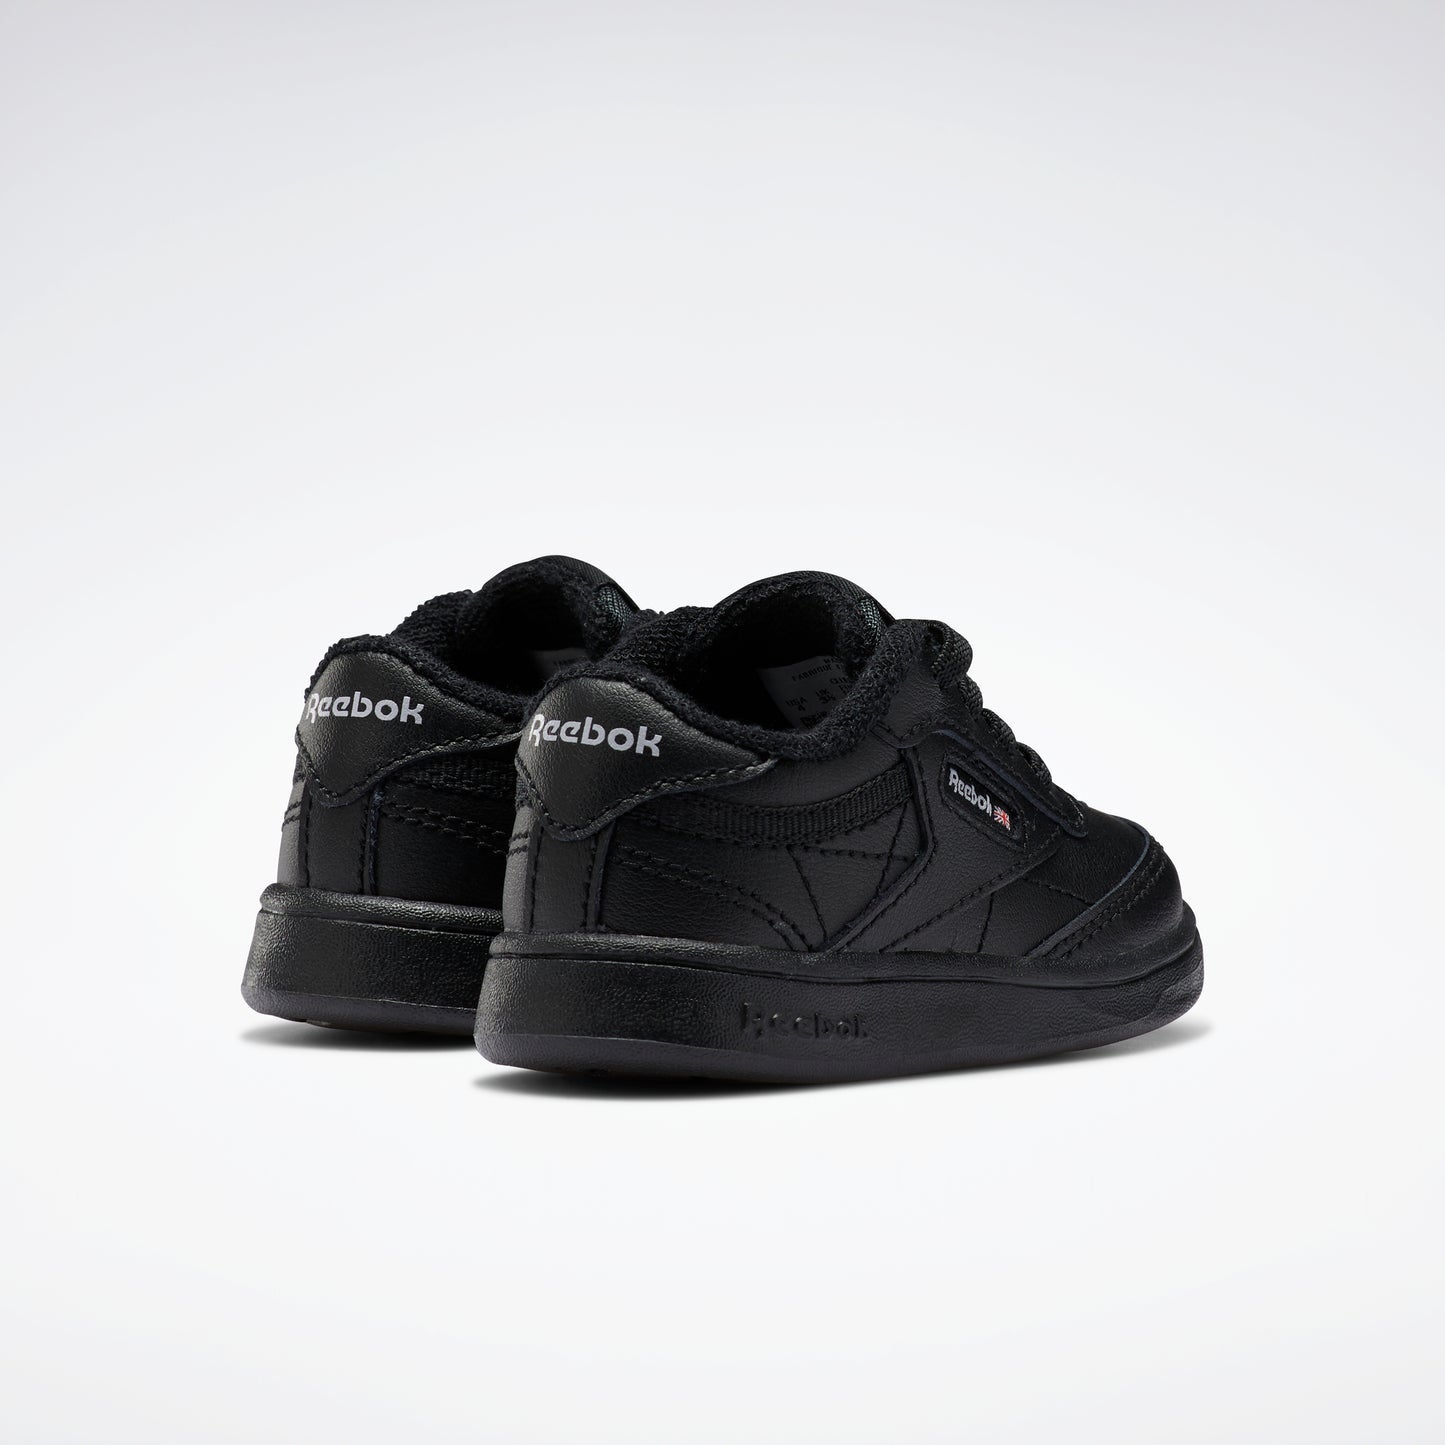 Club C Shoes - Toddler Black/Black/Black